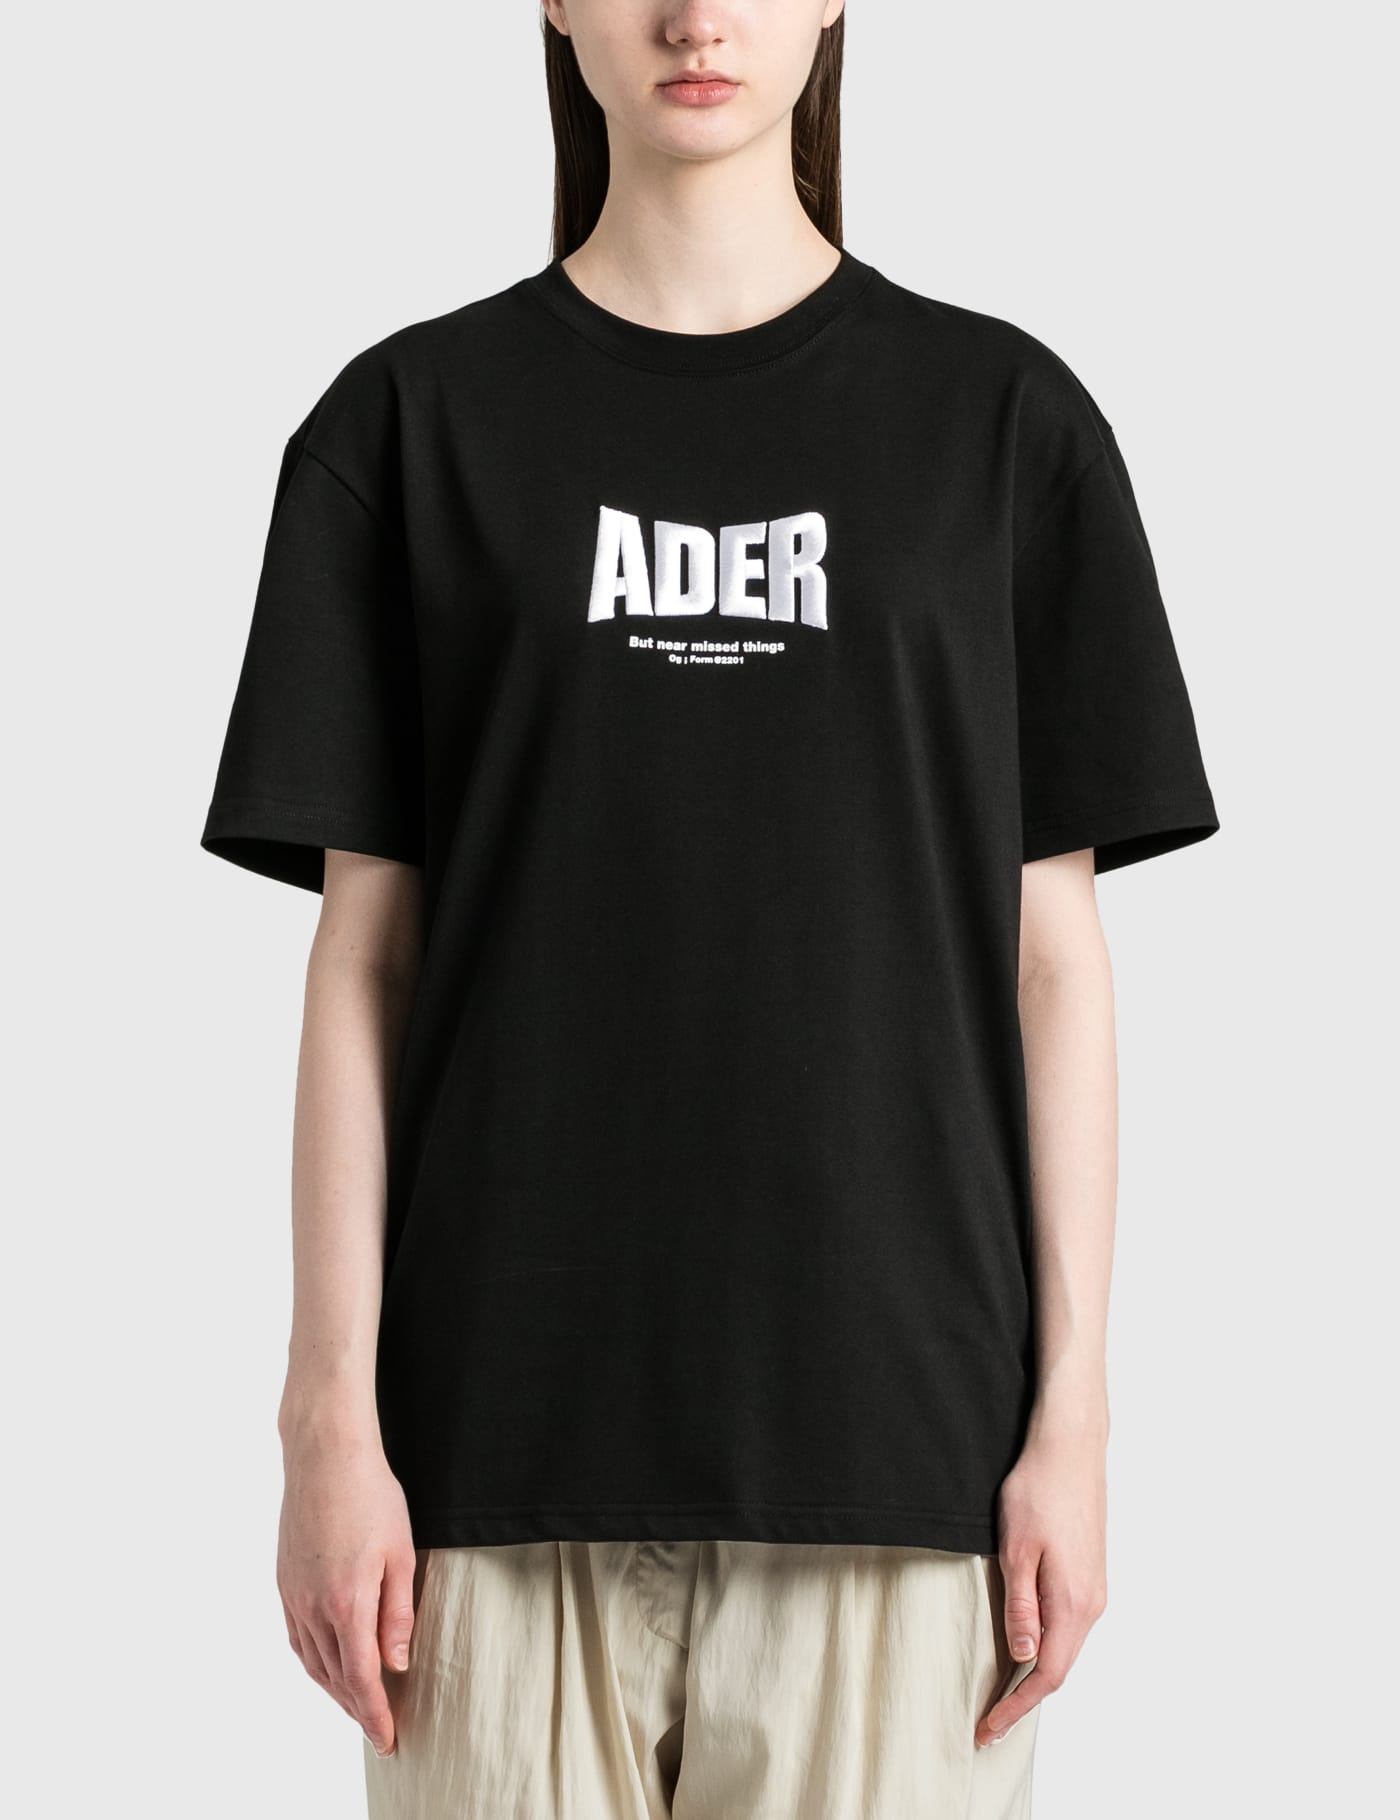 Ader Error - Ader Logo T-shirt | HBX - Globally Curated Fashion